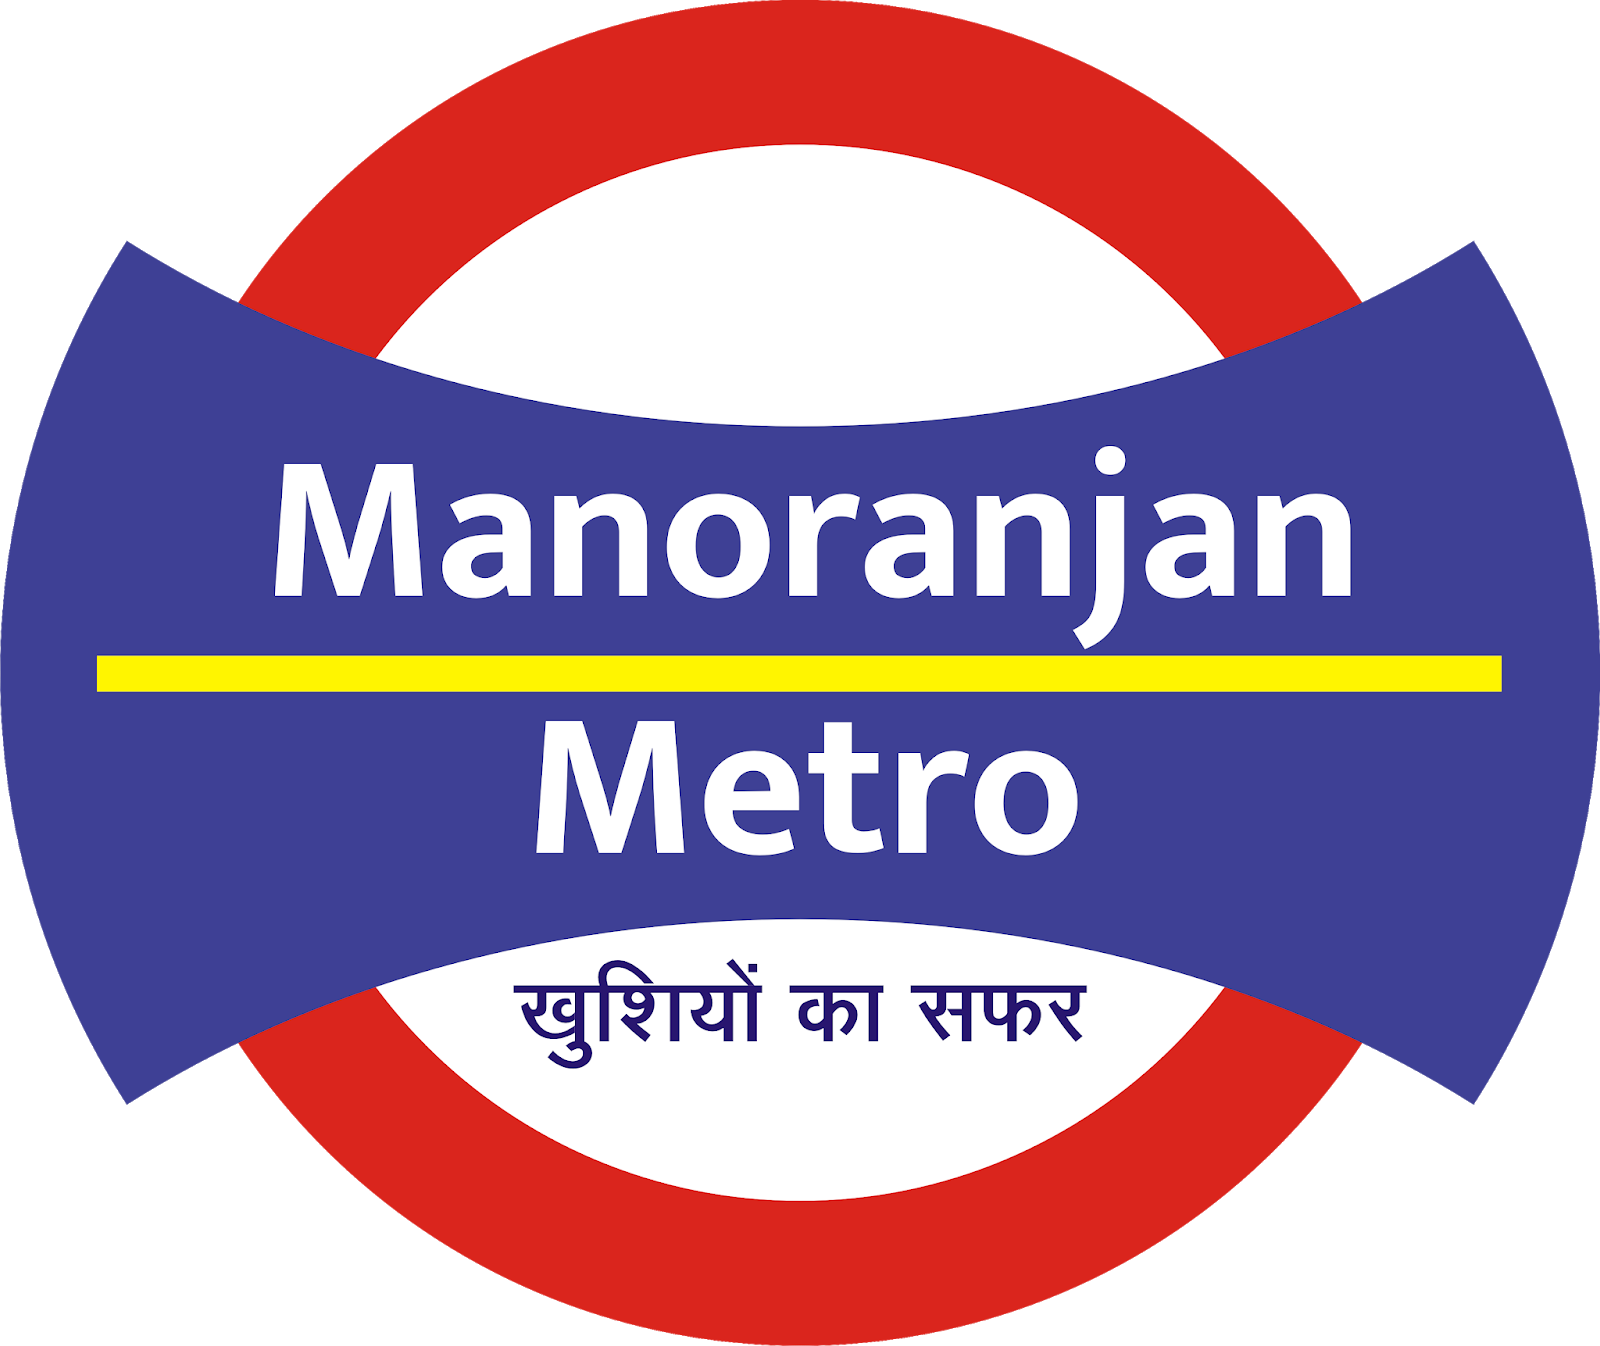 Manoranjan Metro | मनोरंजन मेट्रो